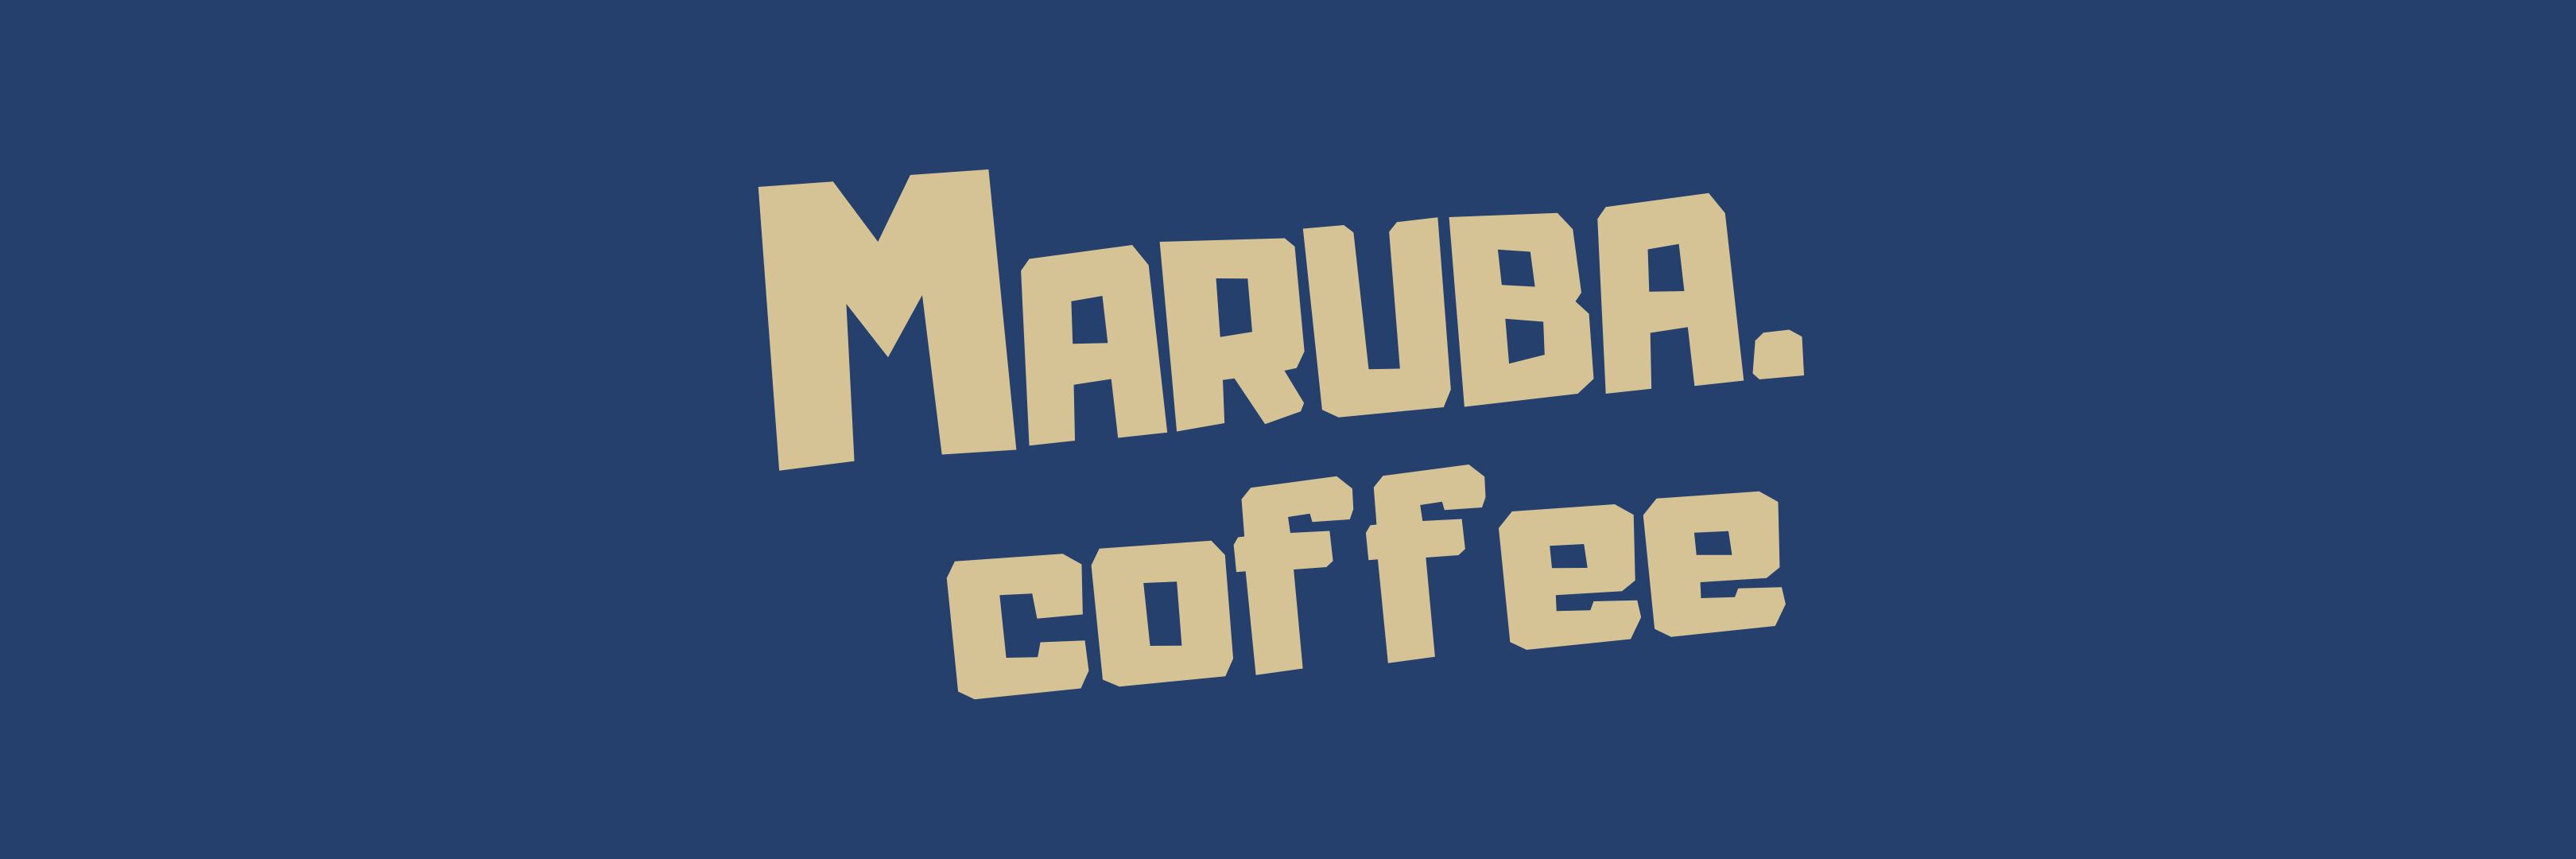 marubacoffee